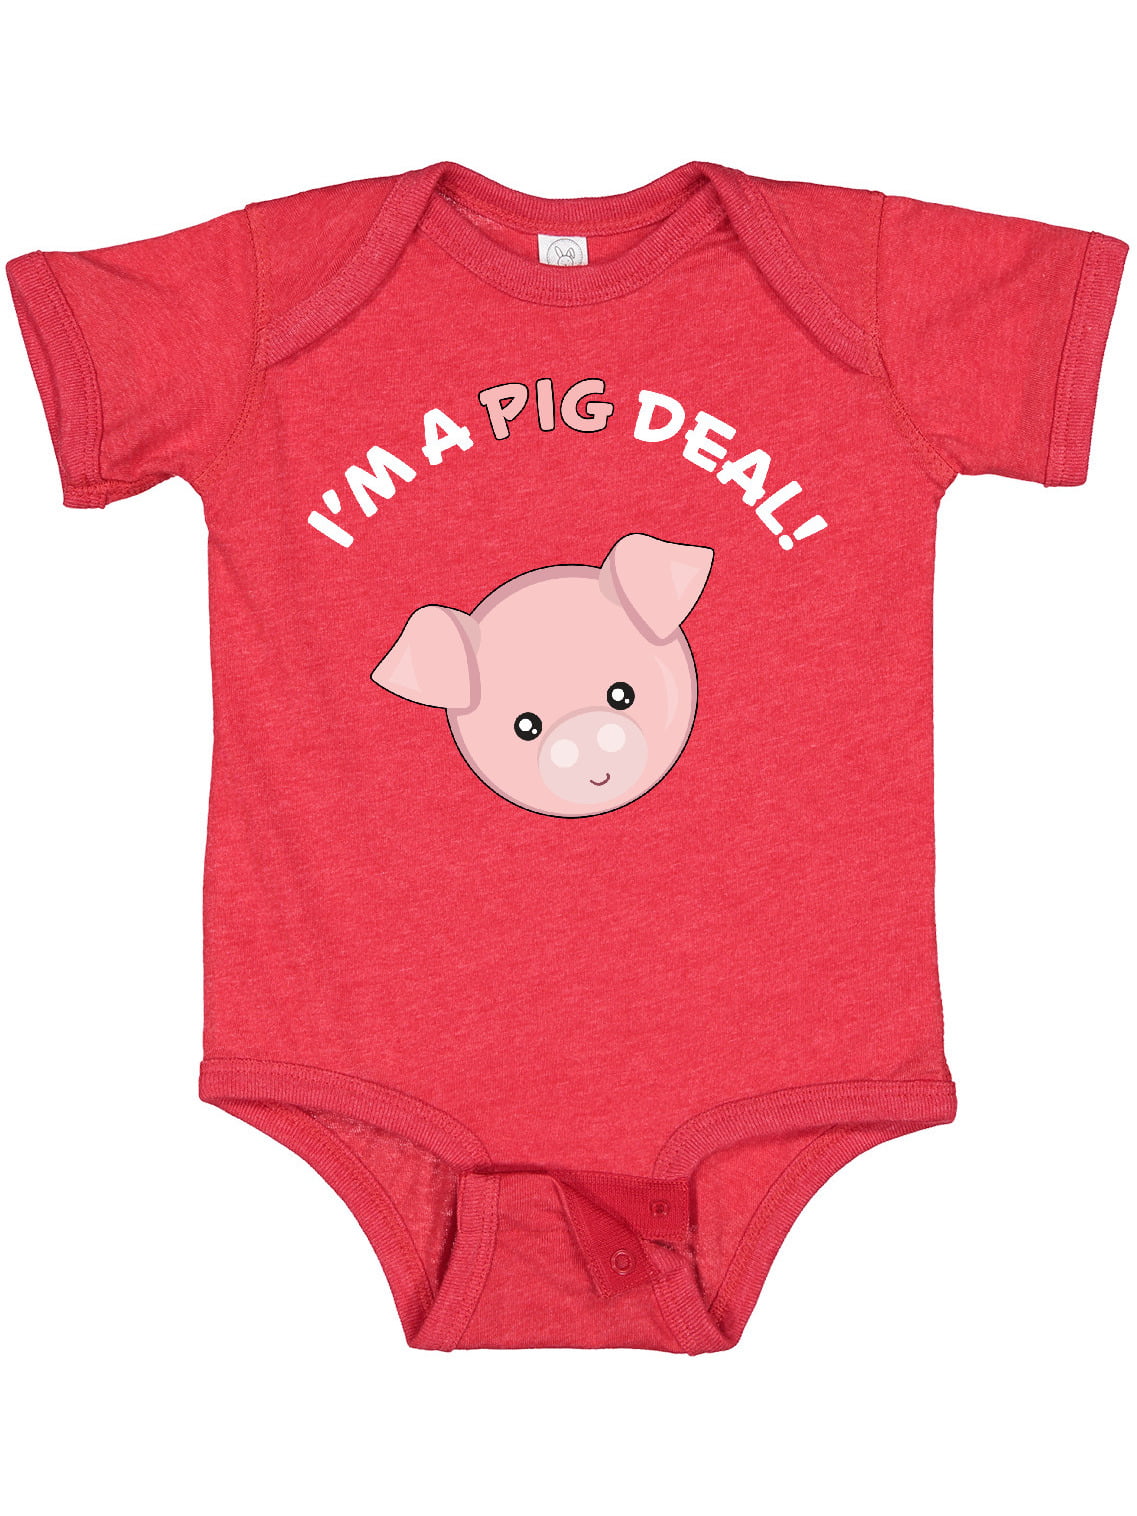 Chicken Kid Pajamas Toddler Baby Boy Girl Bodysuits Farm Animals Cow Pig 